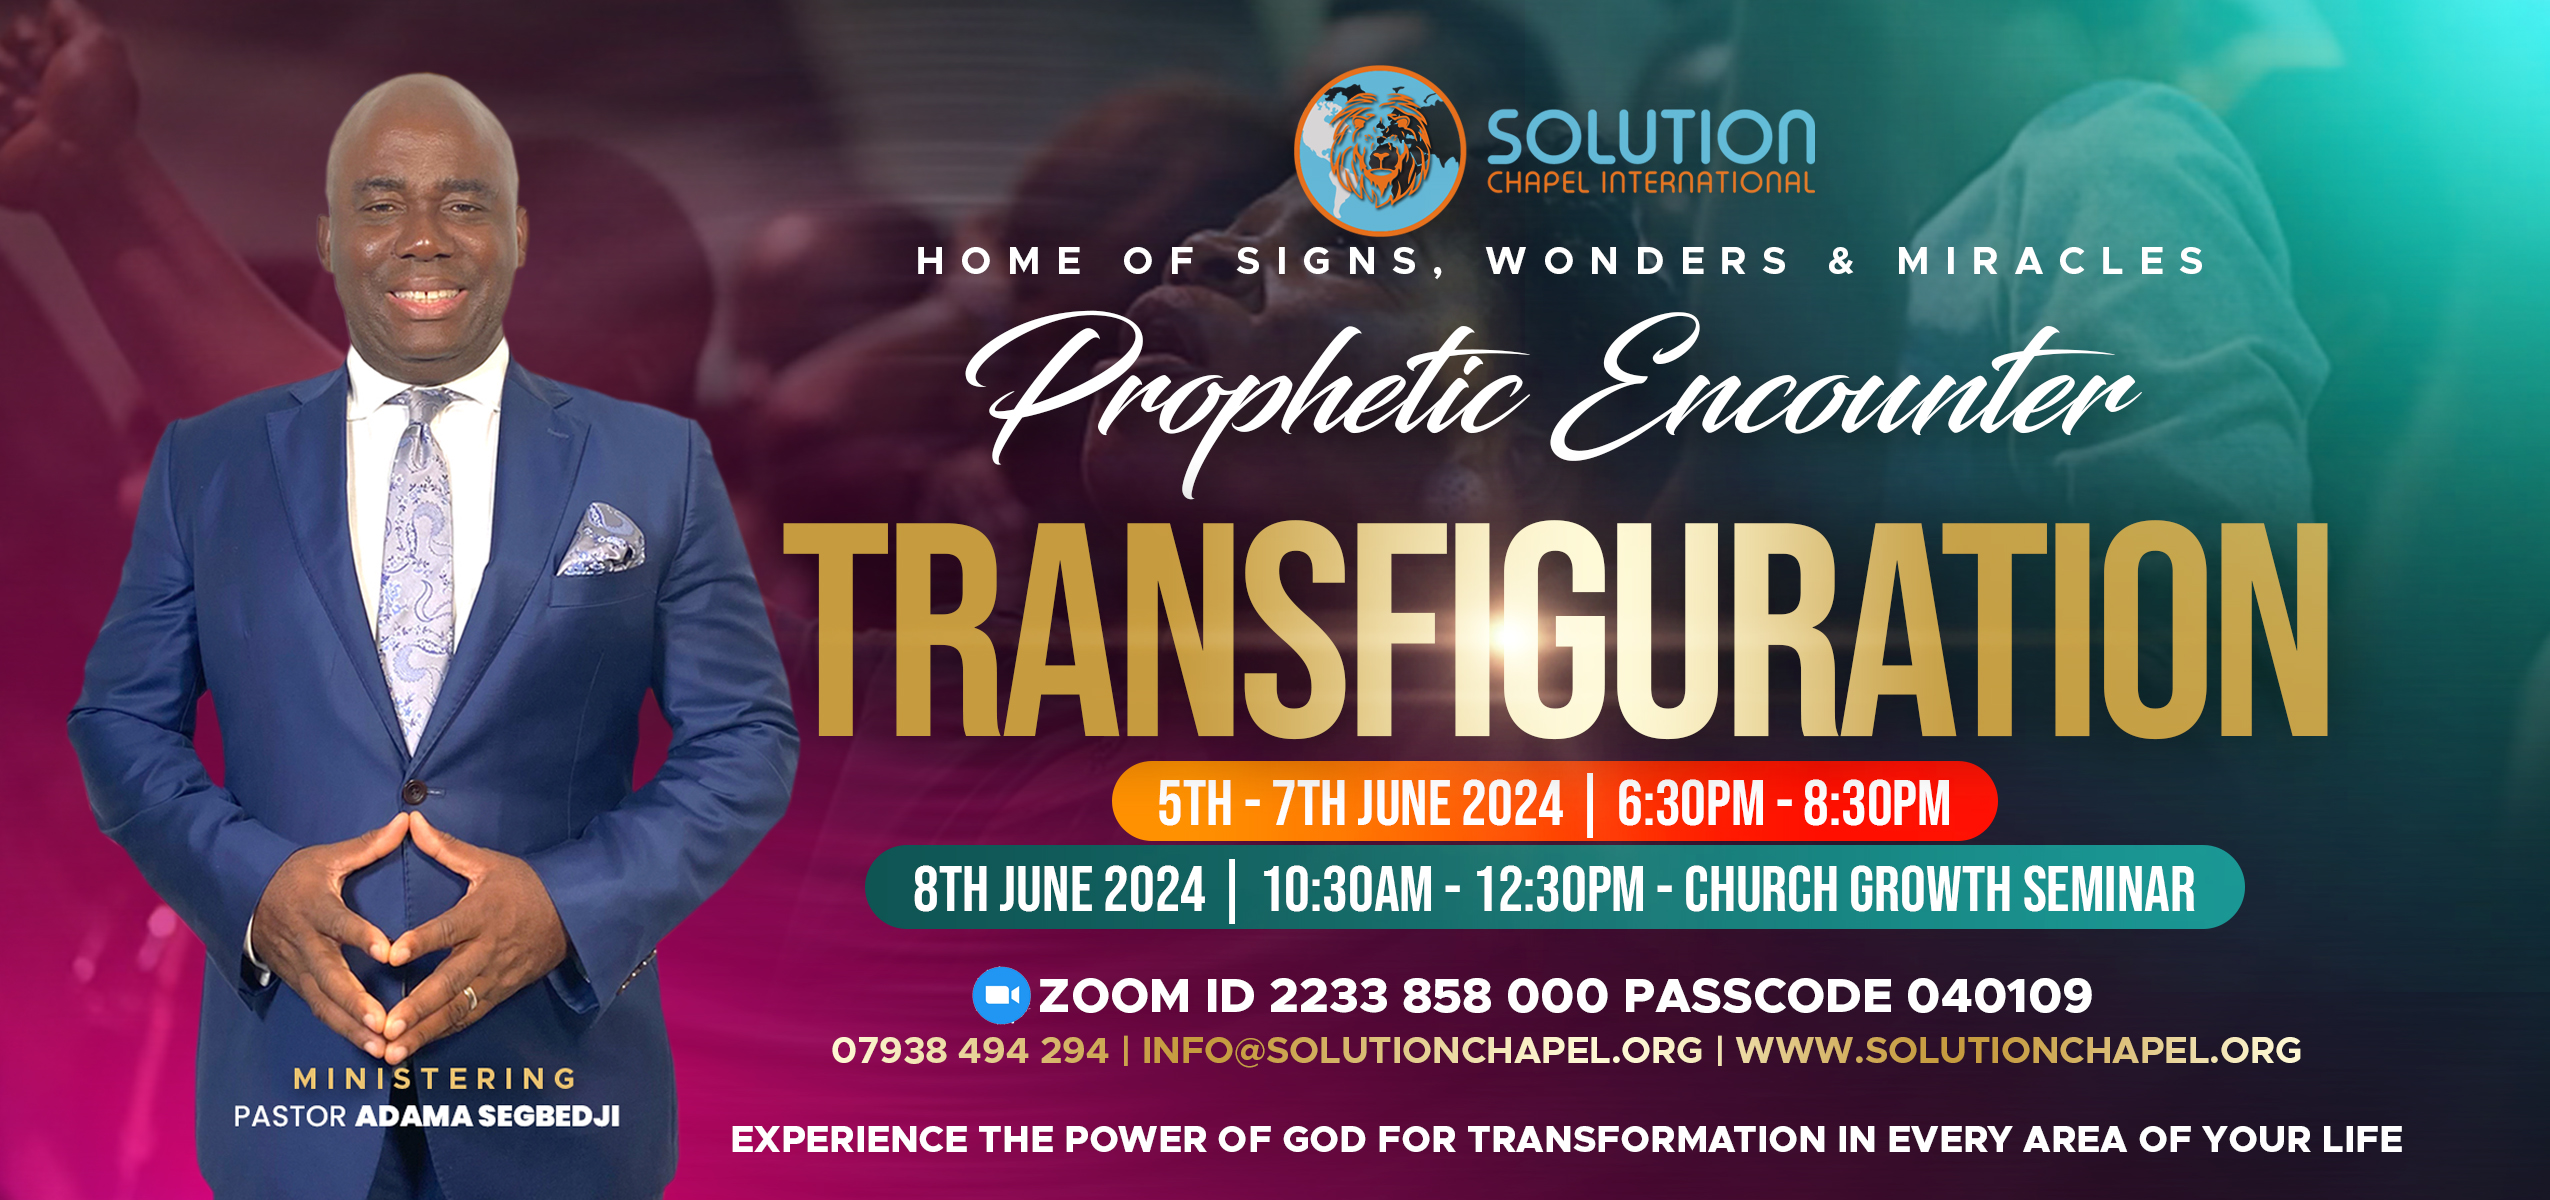 "PROPHETIC ENCOUNTER | TRANSFIGURATION"